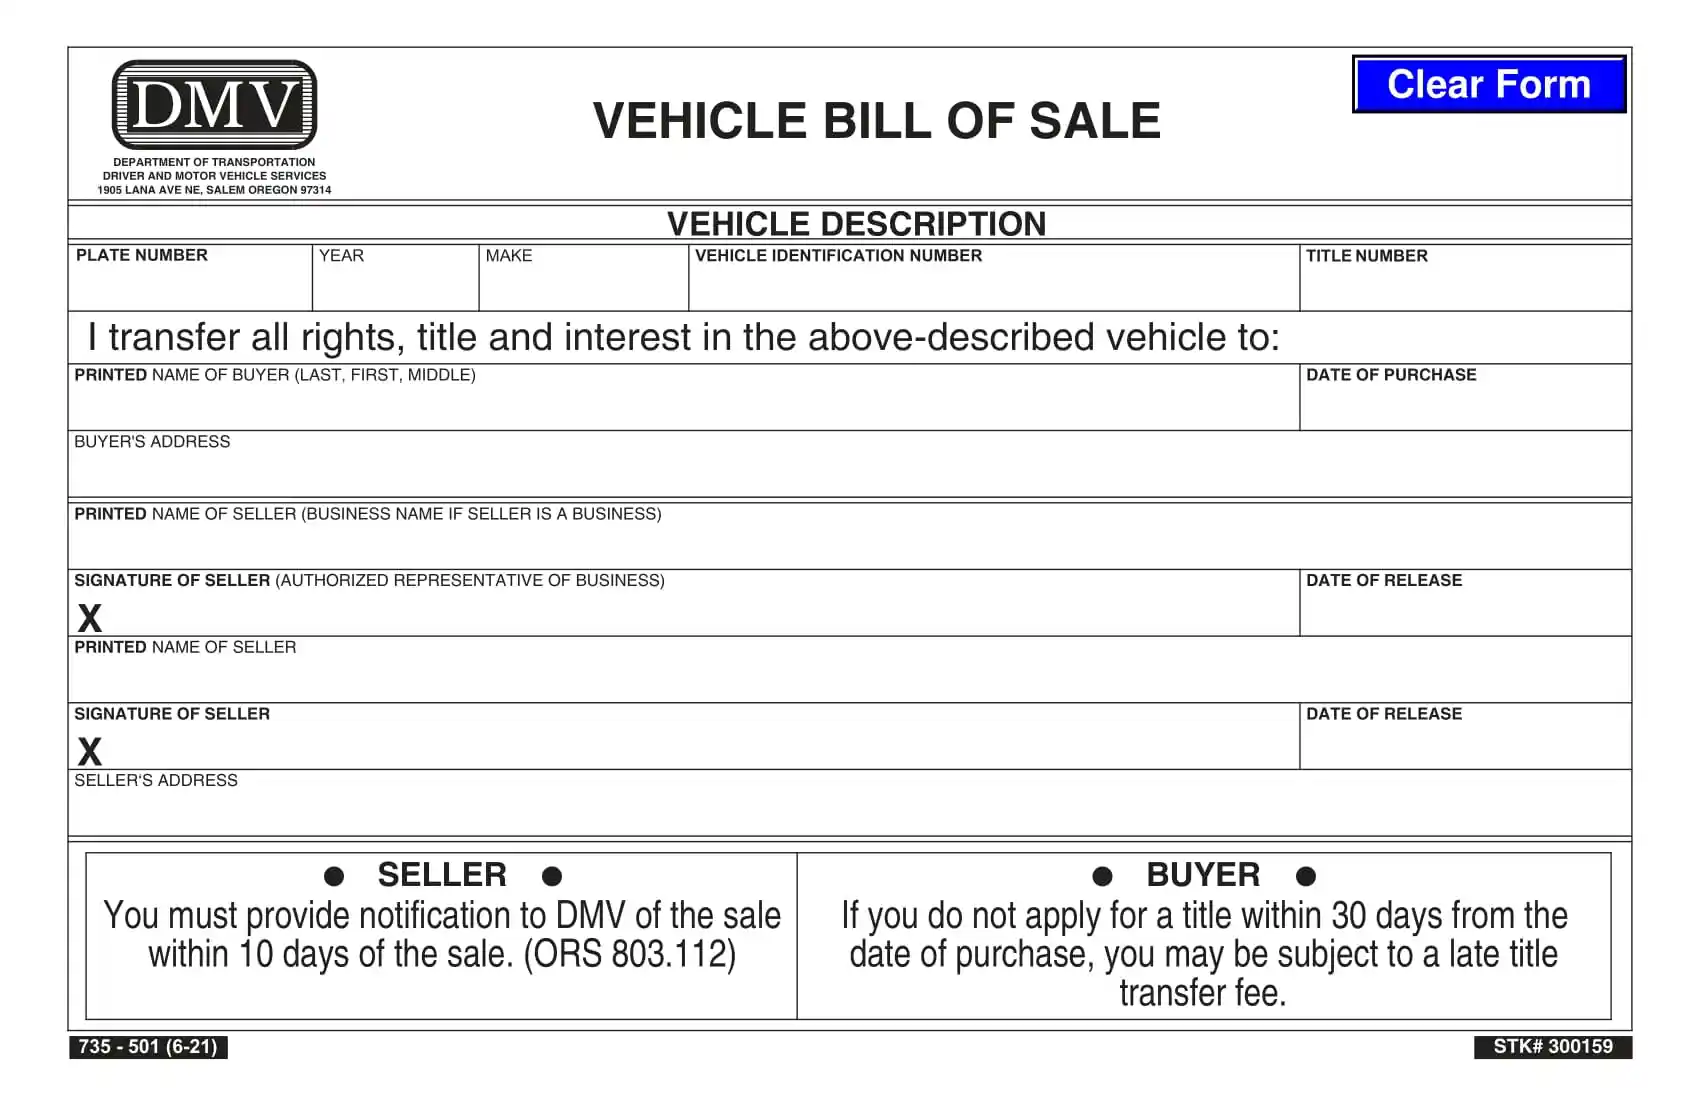 (Vehicle) Form 735-501